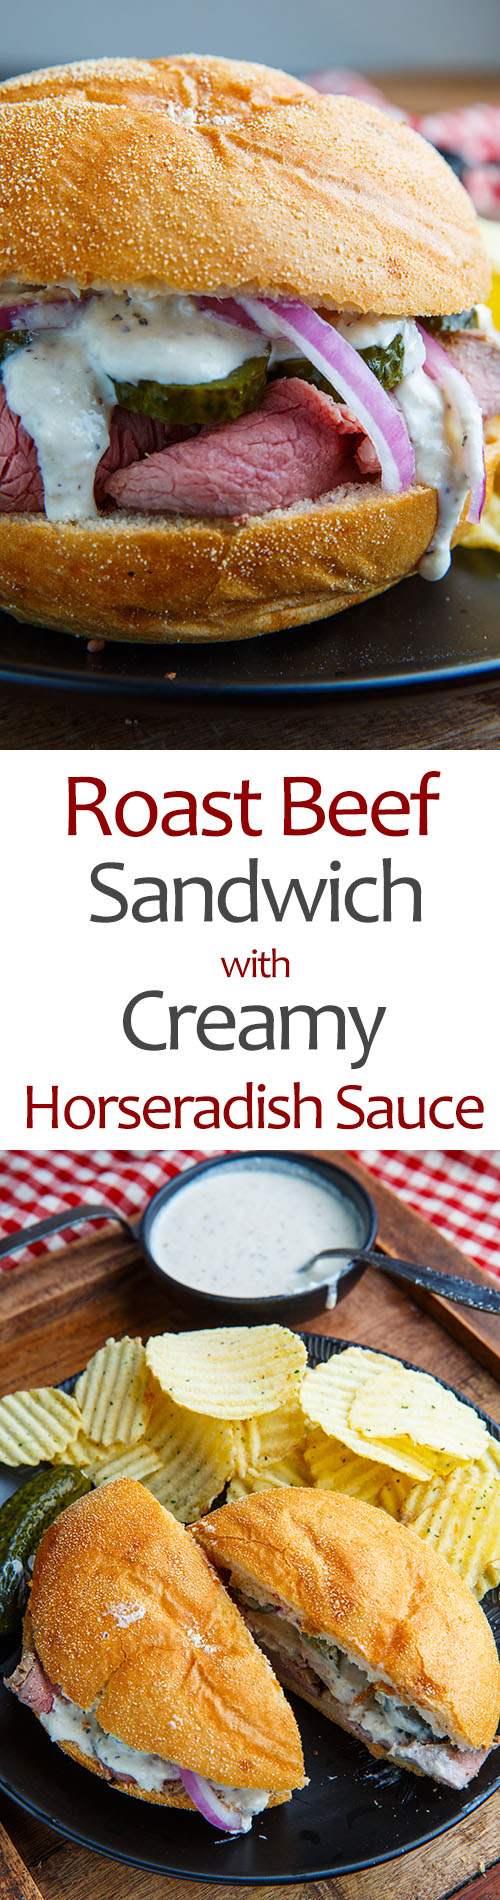 Roast Beef Sandwiches with Horseradish Sauce